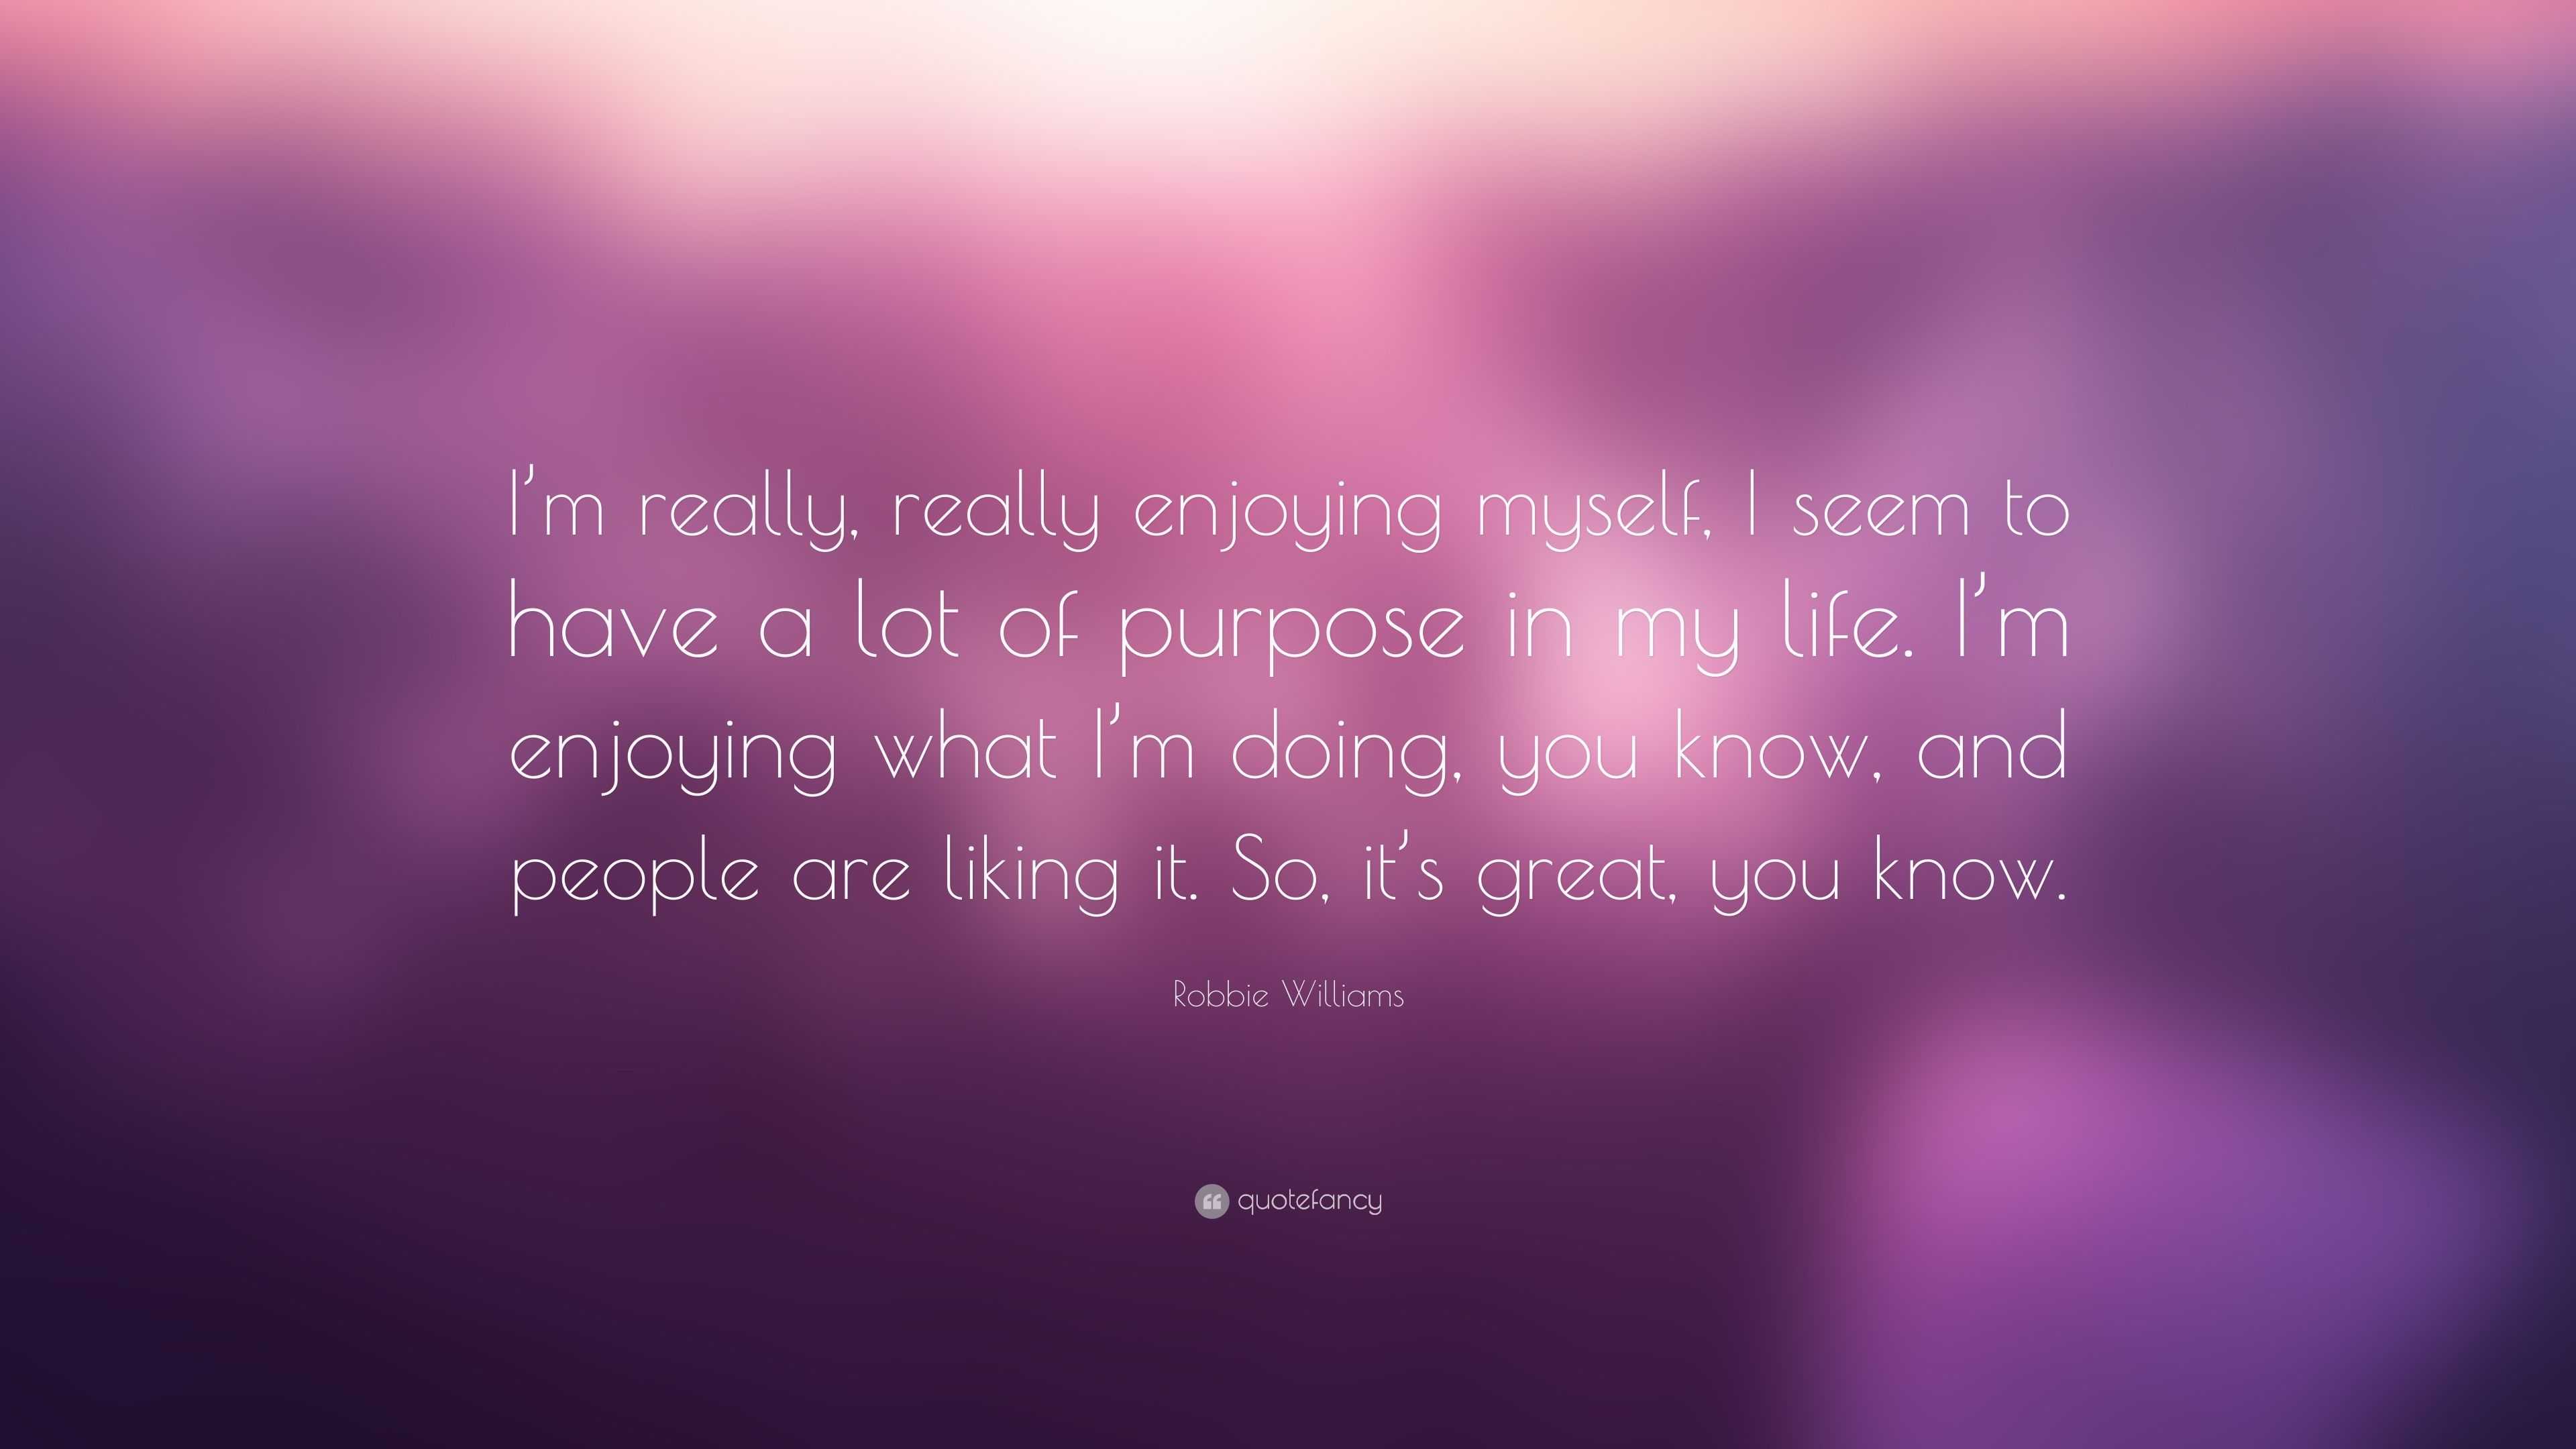 Robbie Williams Quote: “I’m really, really enjoying myself, I seem to ...